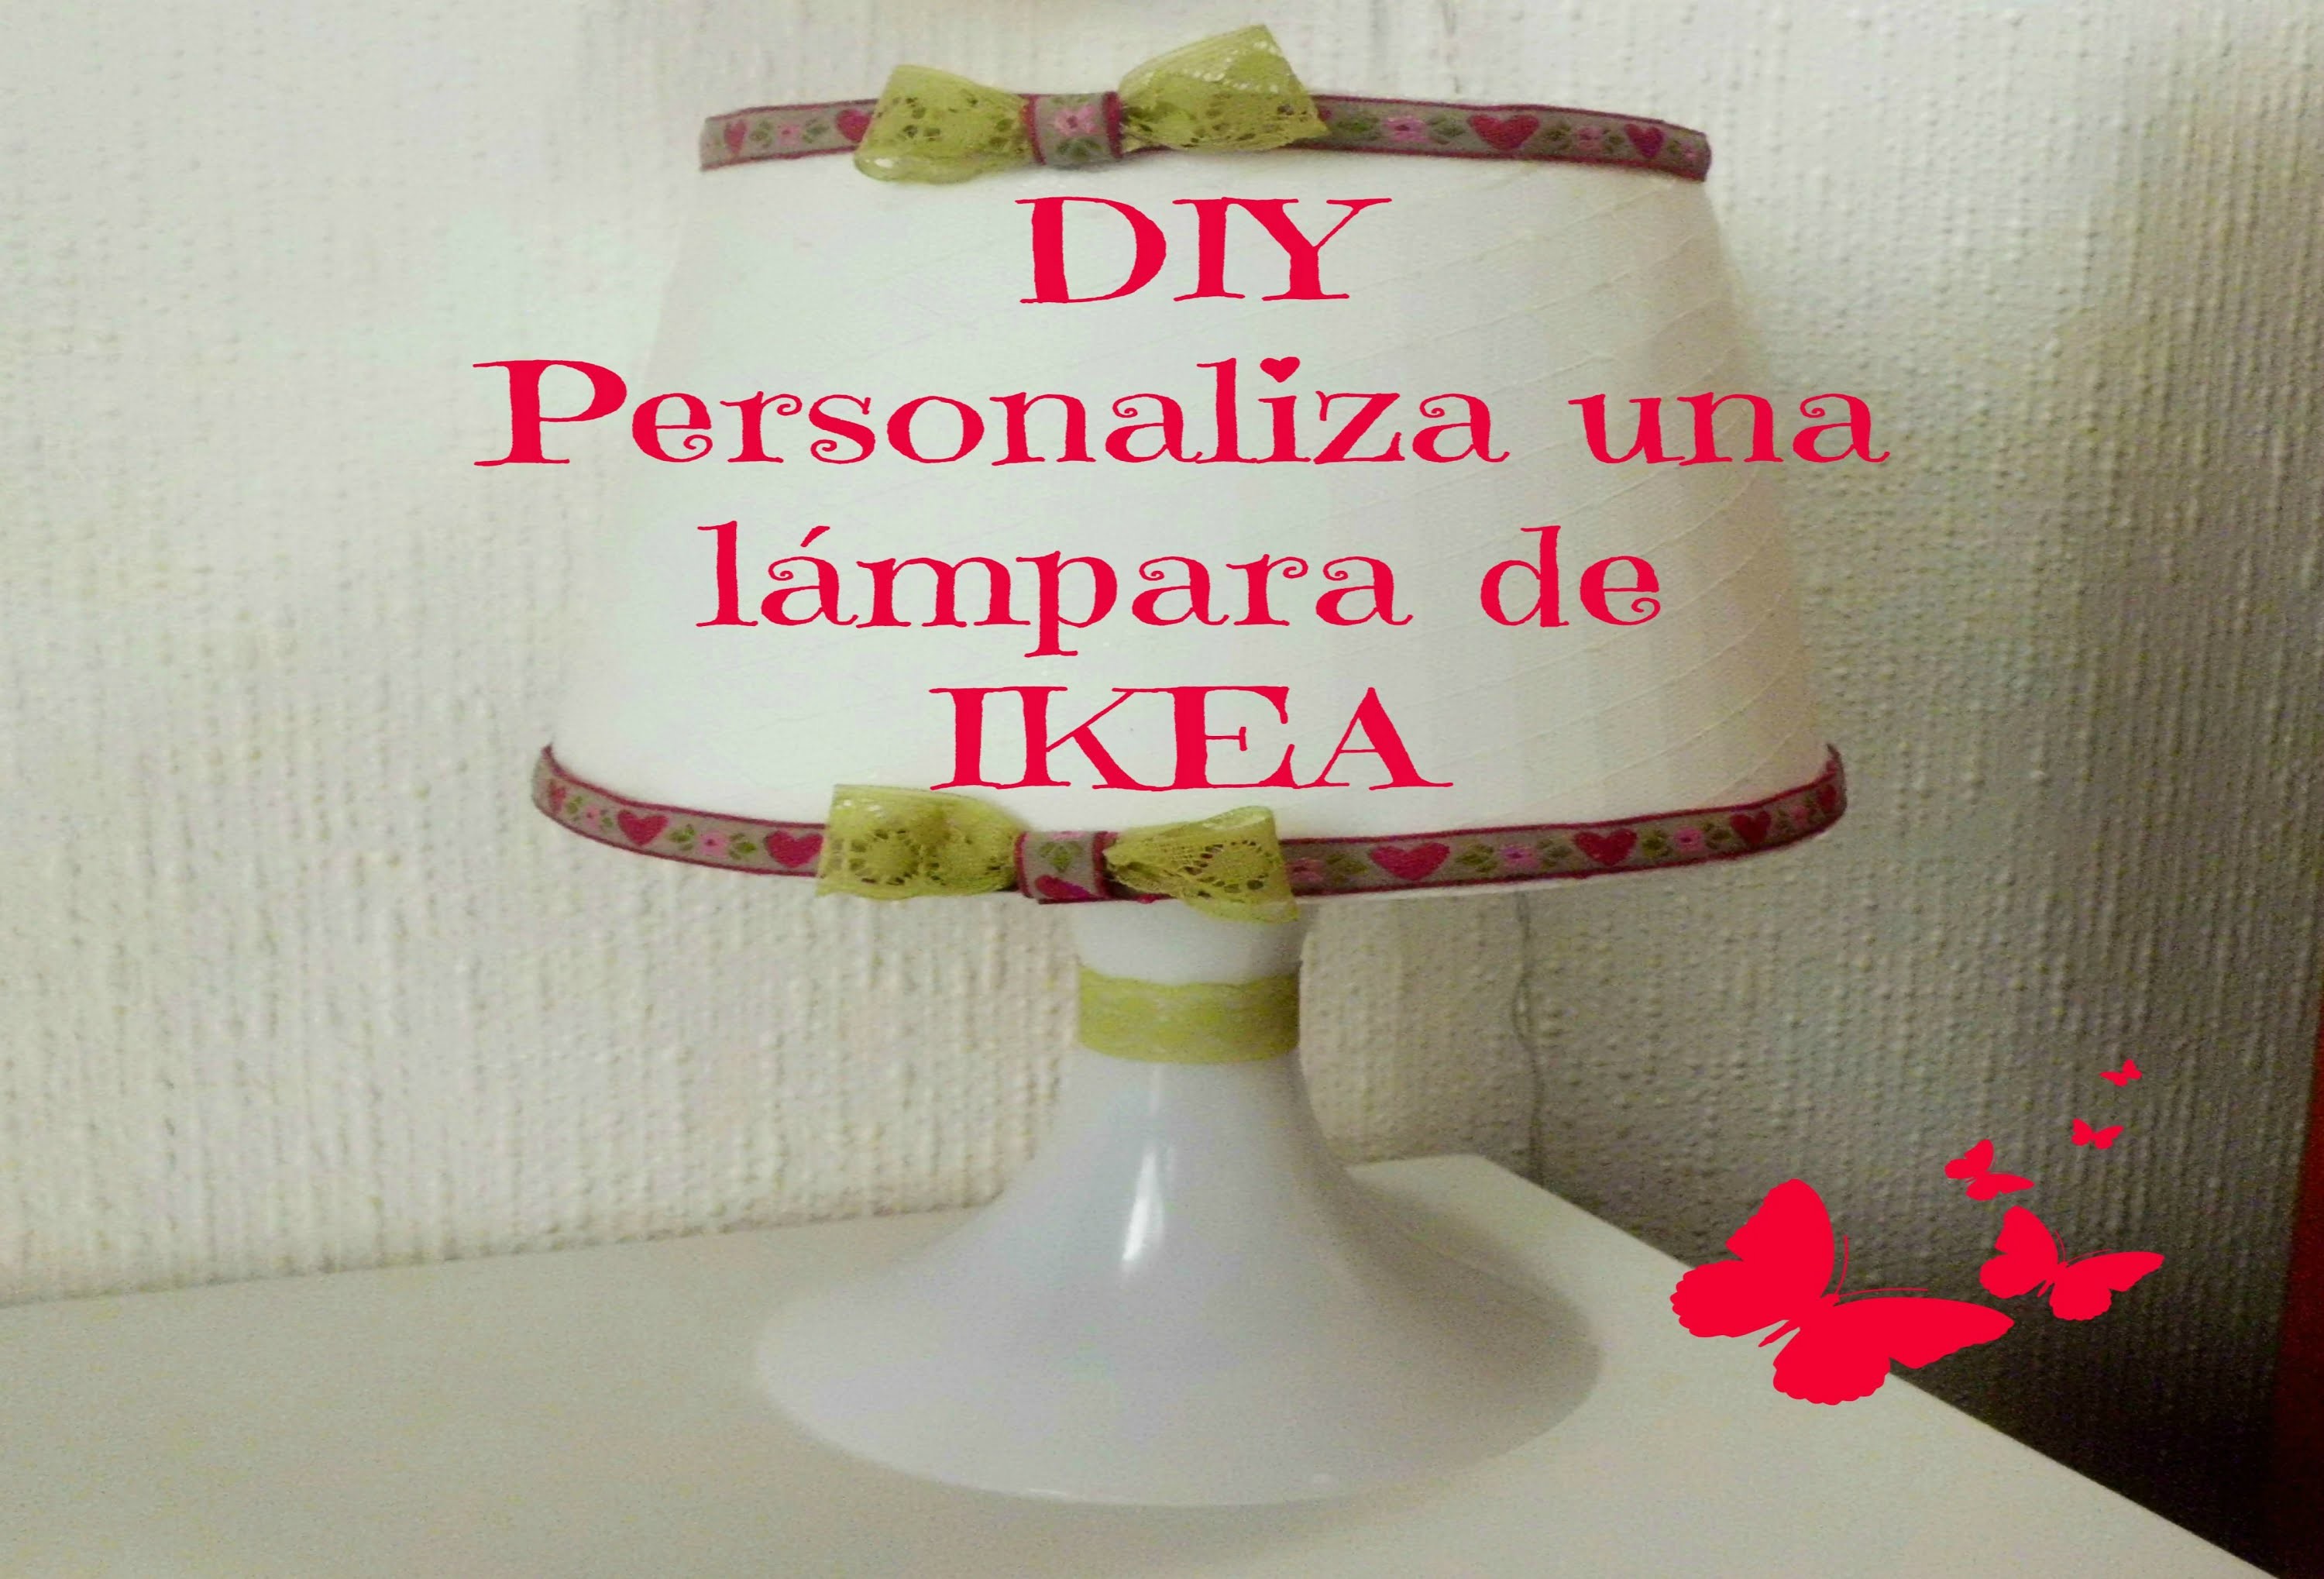 DIY PERSONALIZA UNA LAMPARA. DIY LAMP